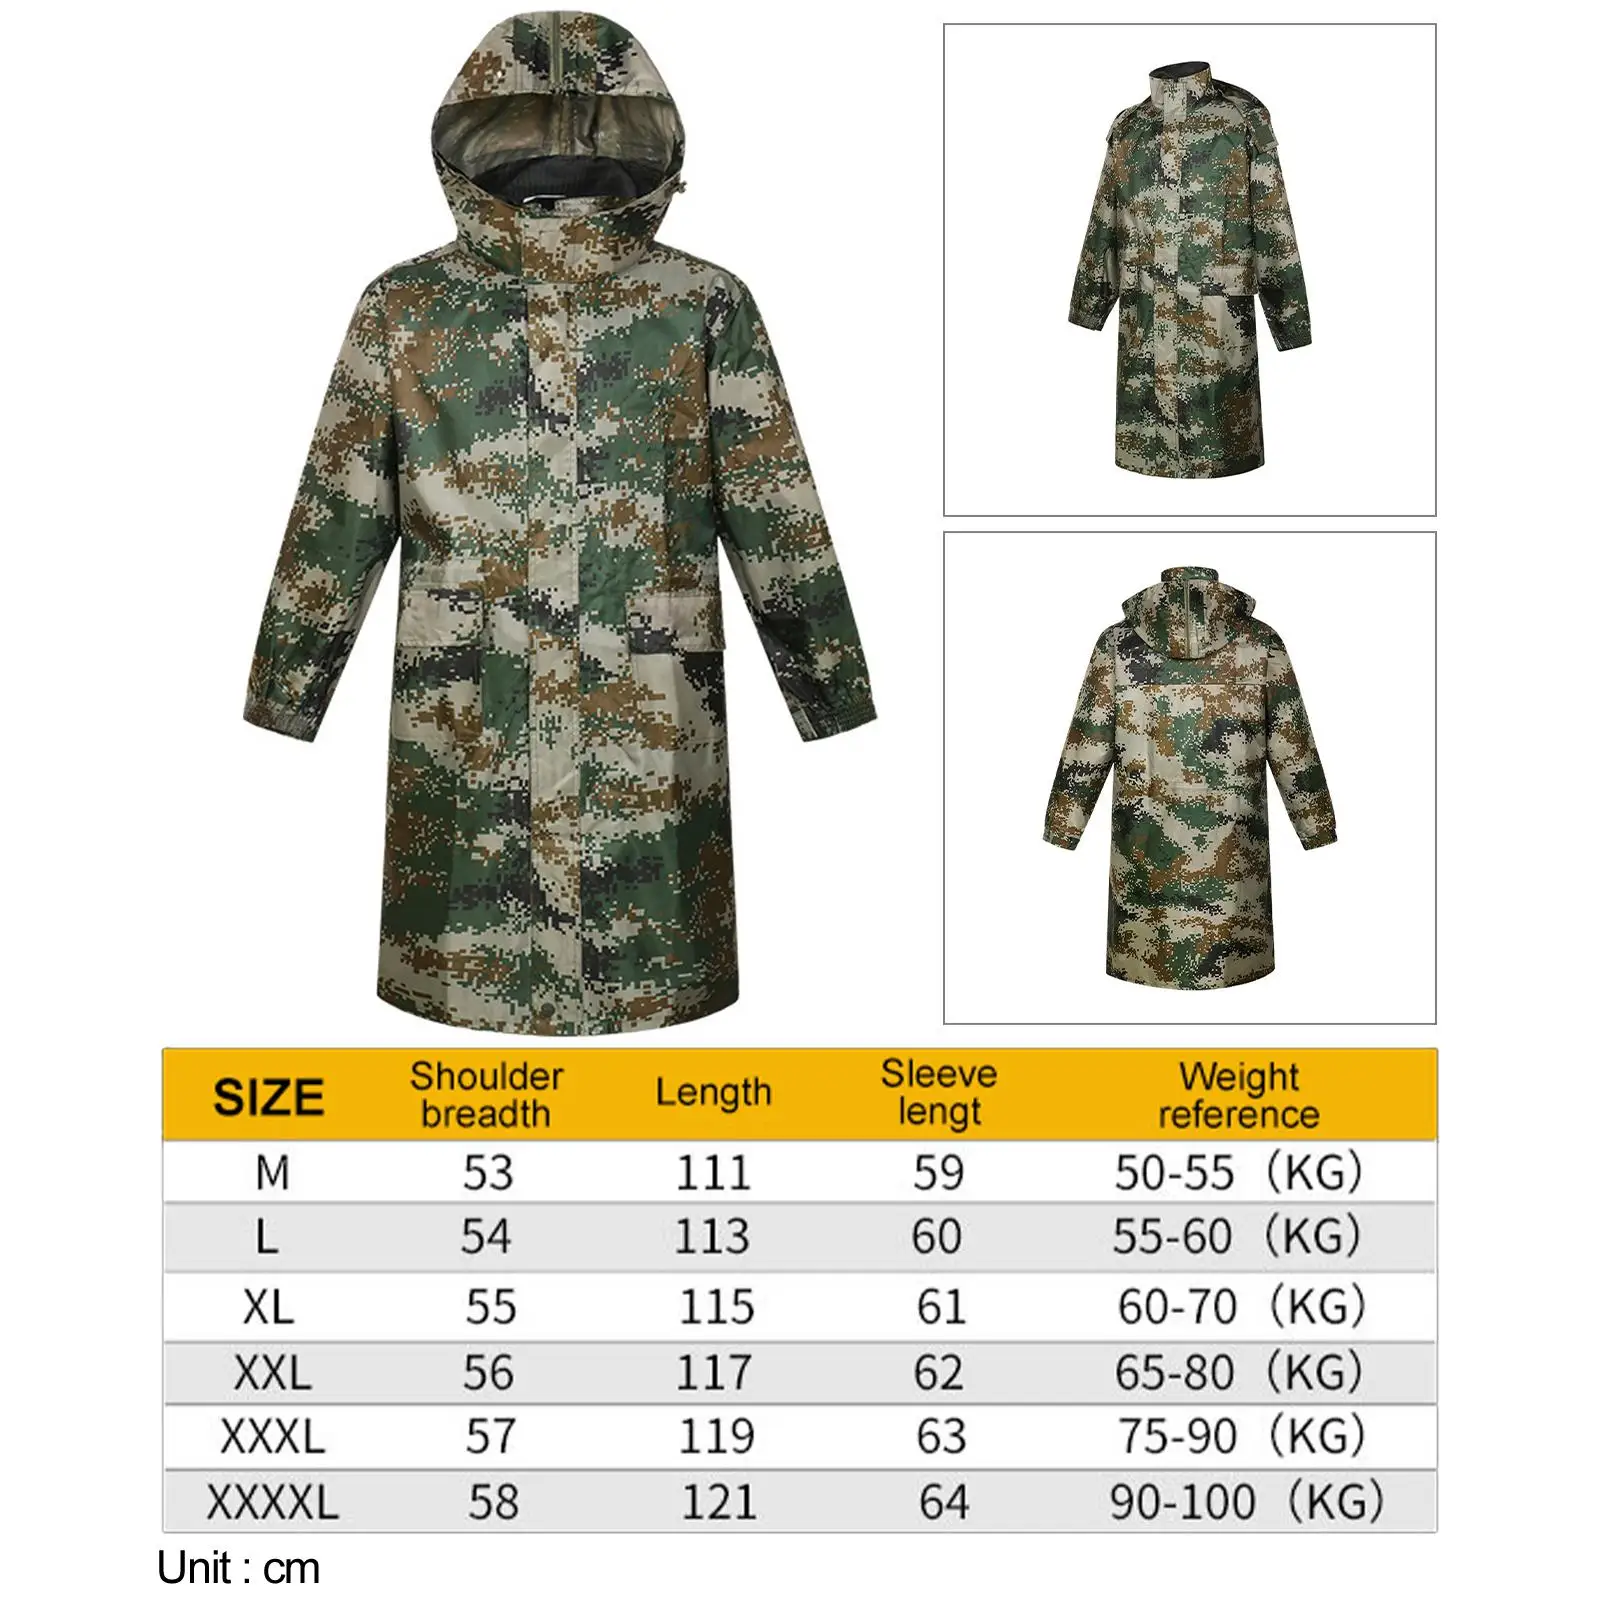 Raincoats with Hood Waterproof Rain Jacket for Fishing Travel Camping Hiking Outdoor Activities